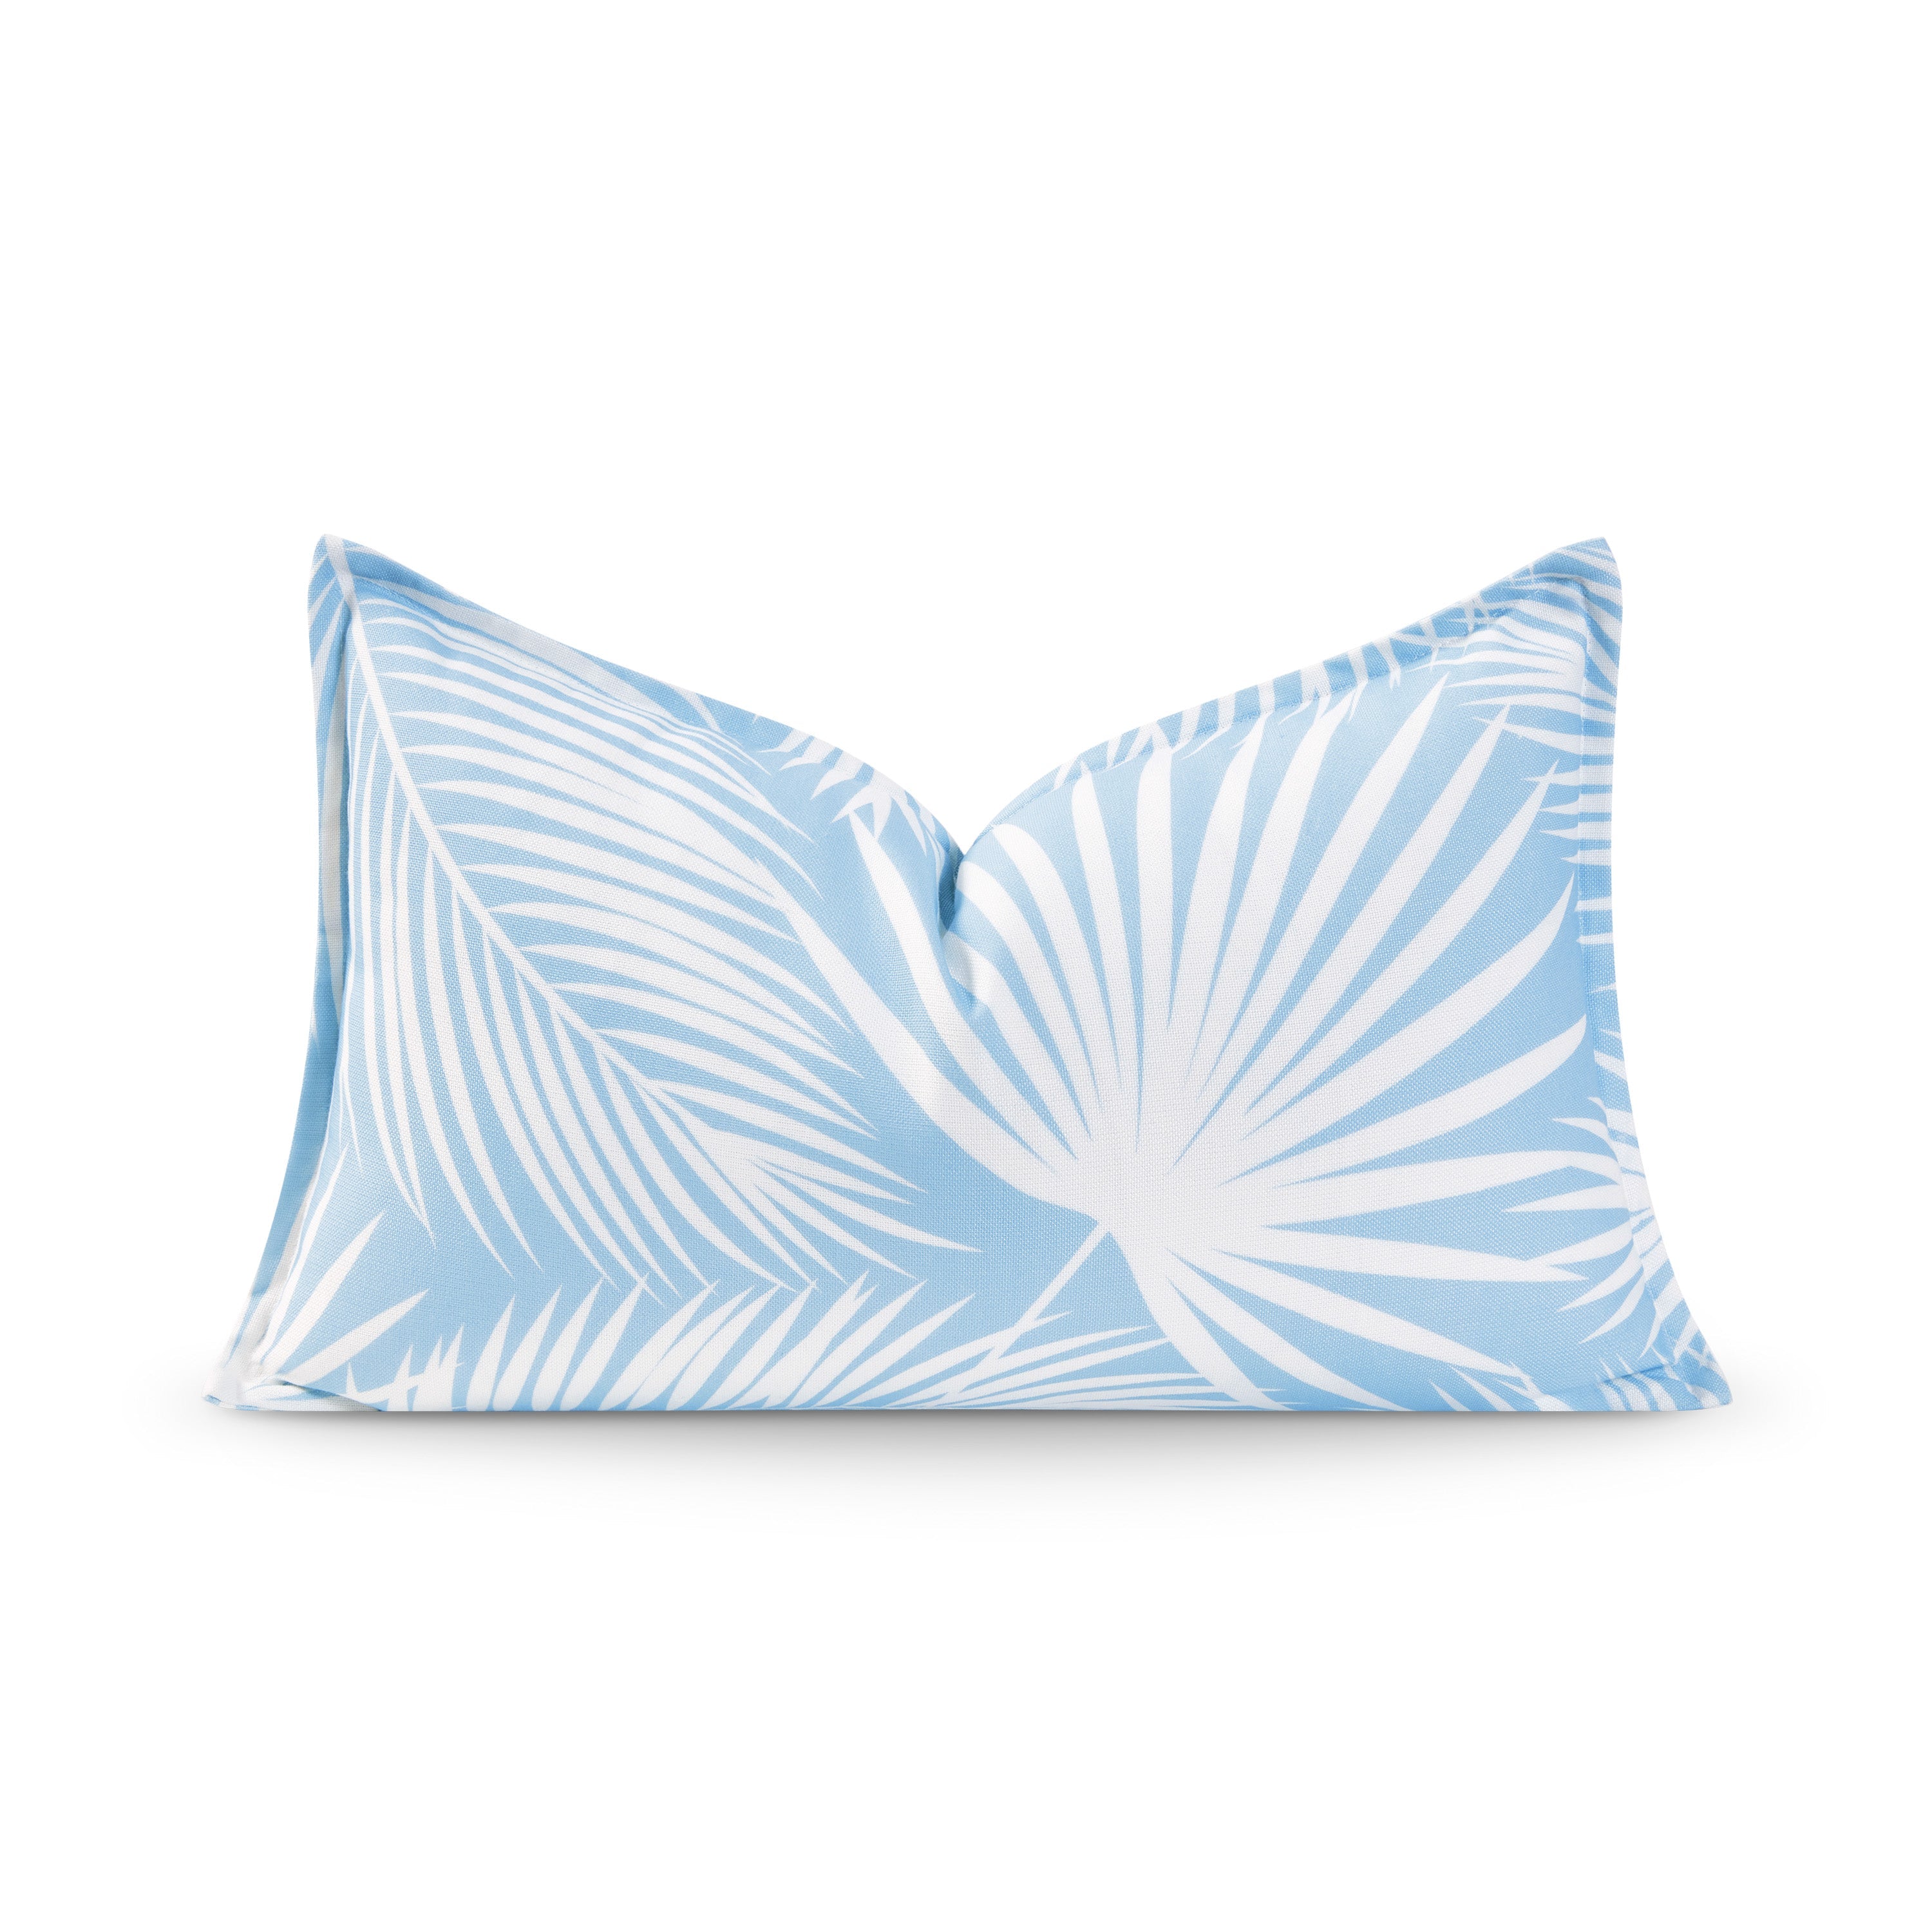 Coastal Hampton Style Indoor Outdoor Lumbar Pillow Cover, Palm Leaf, Baby Blue, 12"x20"